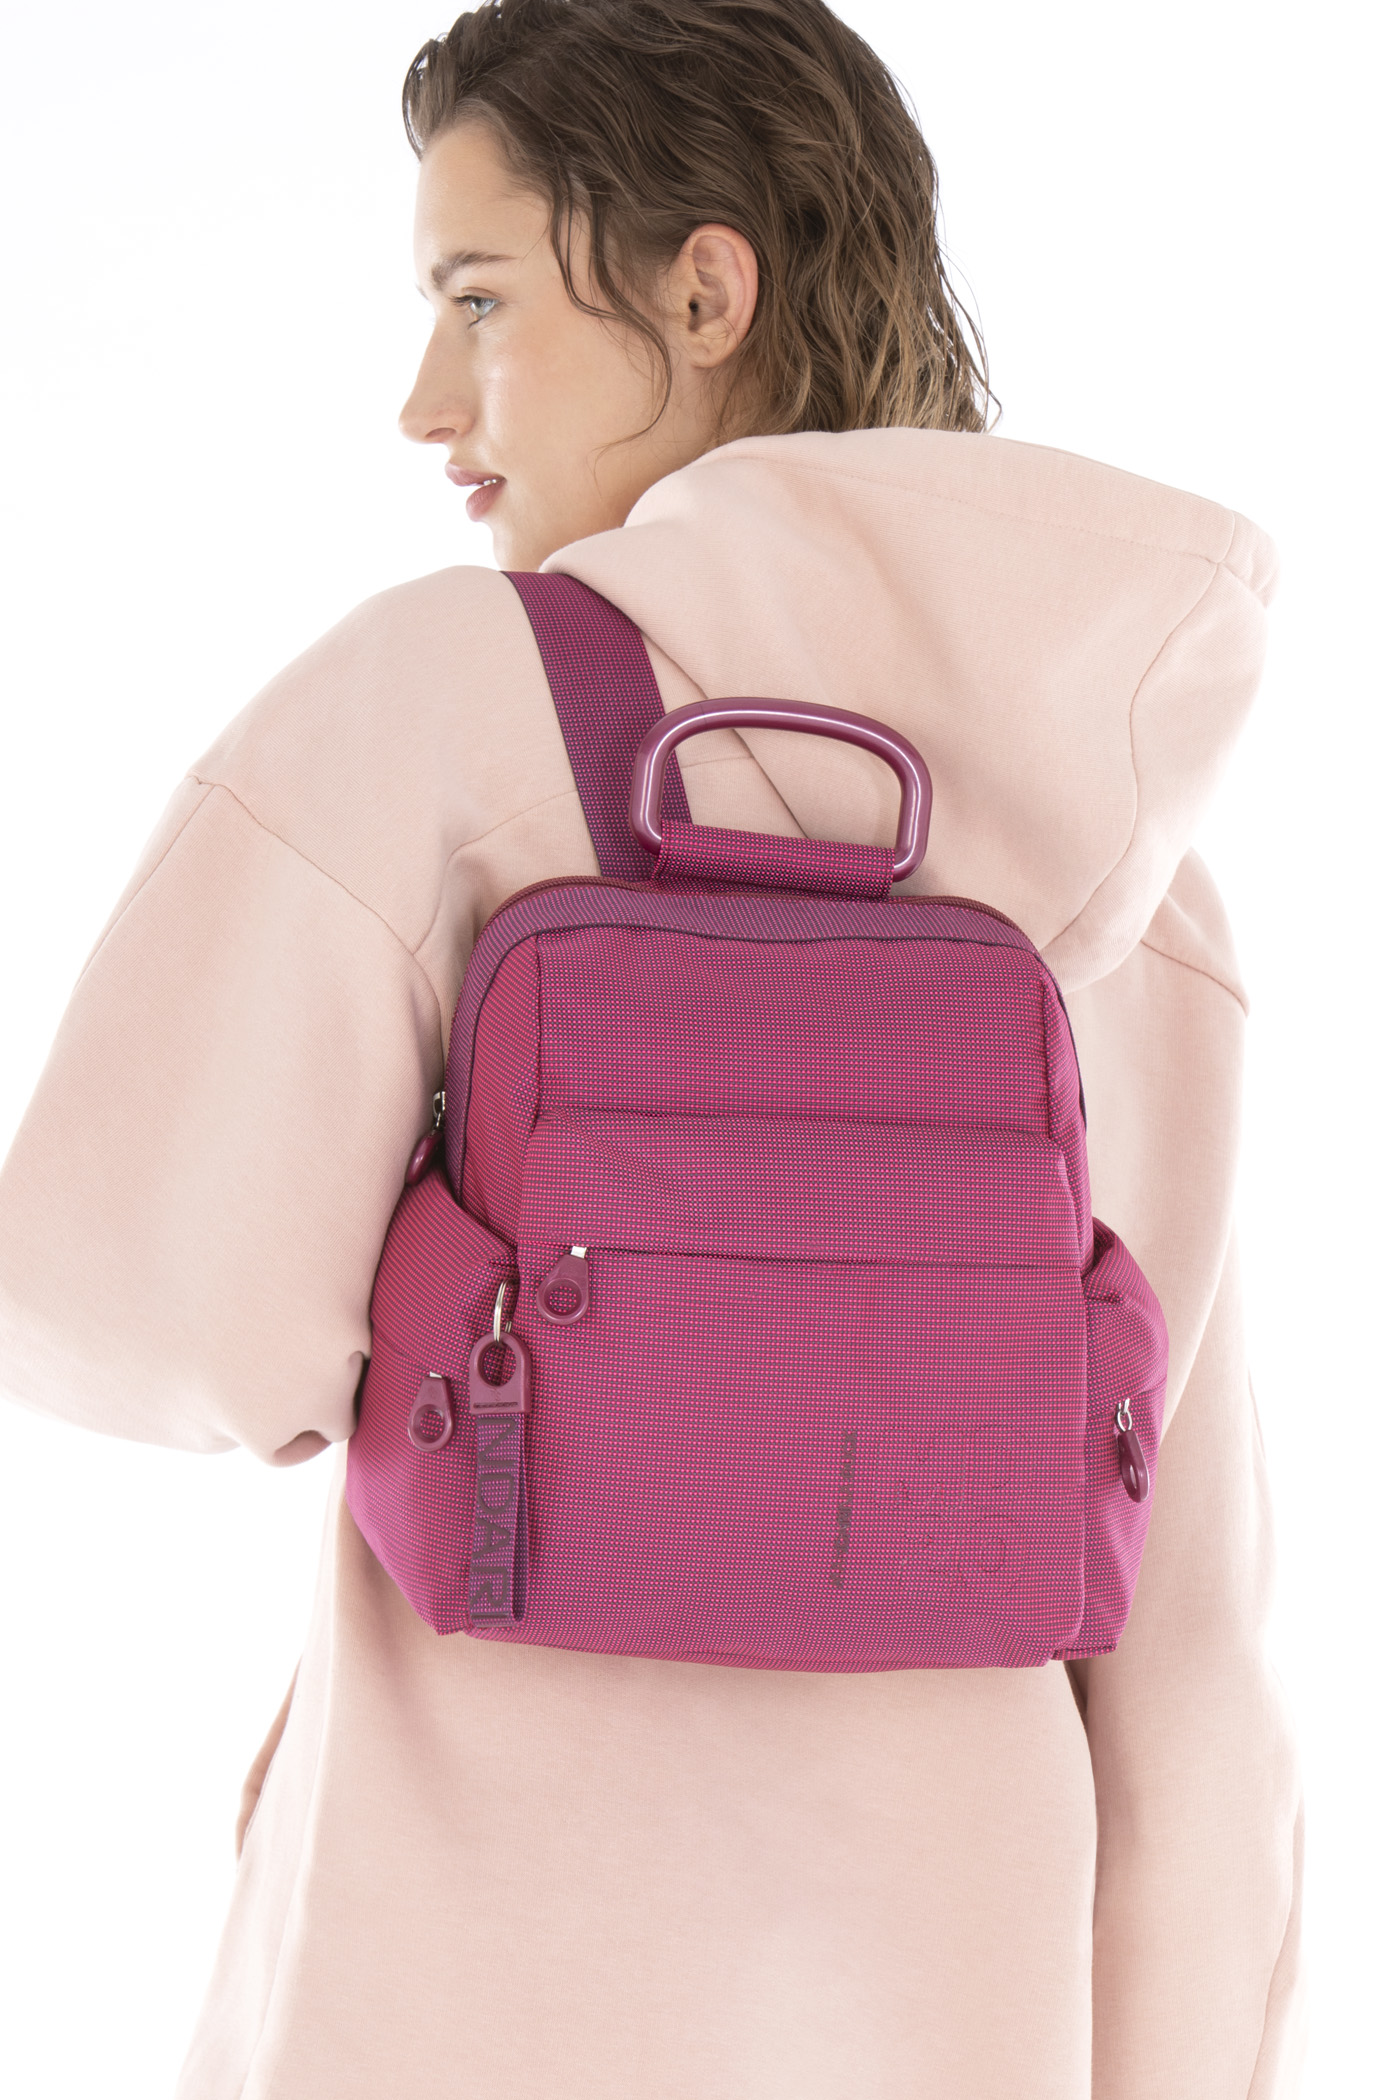 MANDARINA DUCK MD20 Backpack S Phlox Rosa 